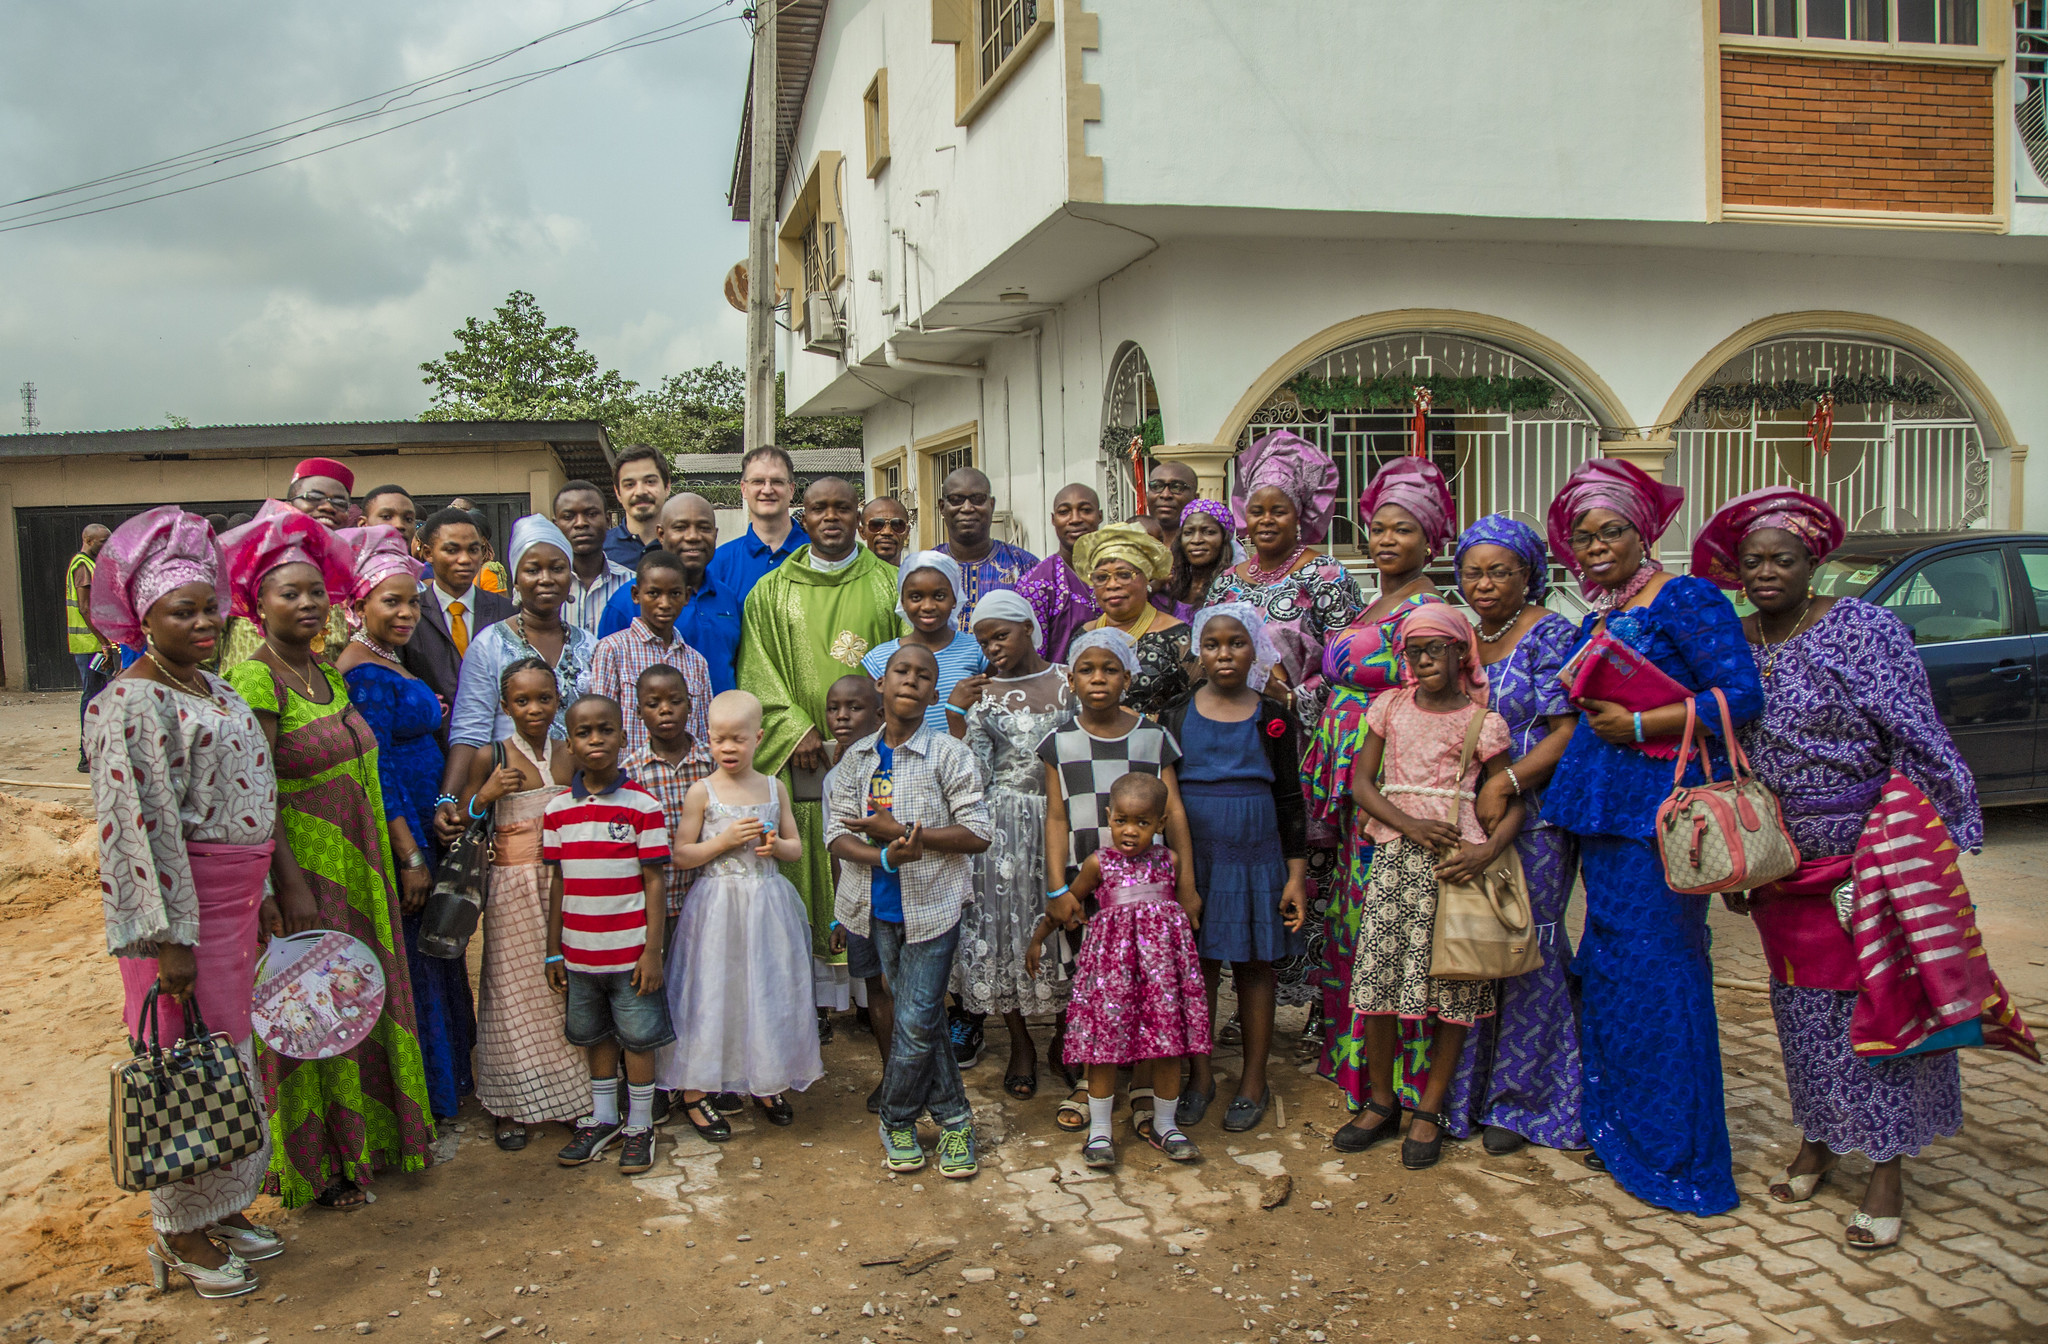 Women church Nigeria Image Flickr Justin Norman